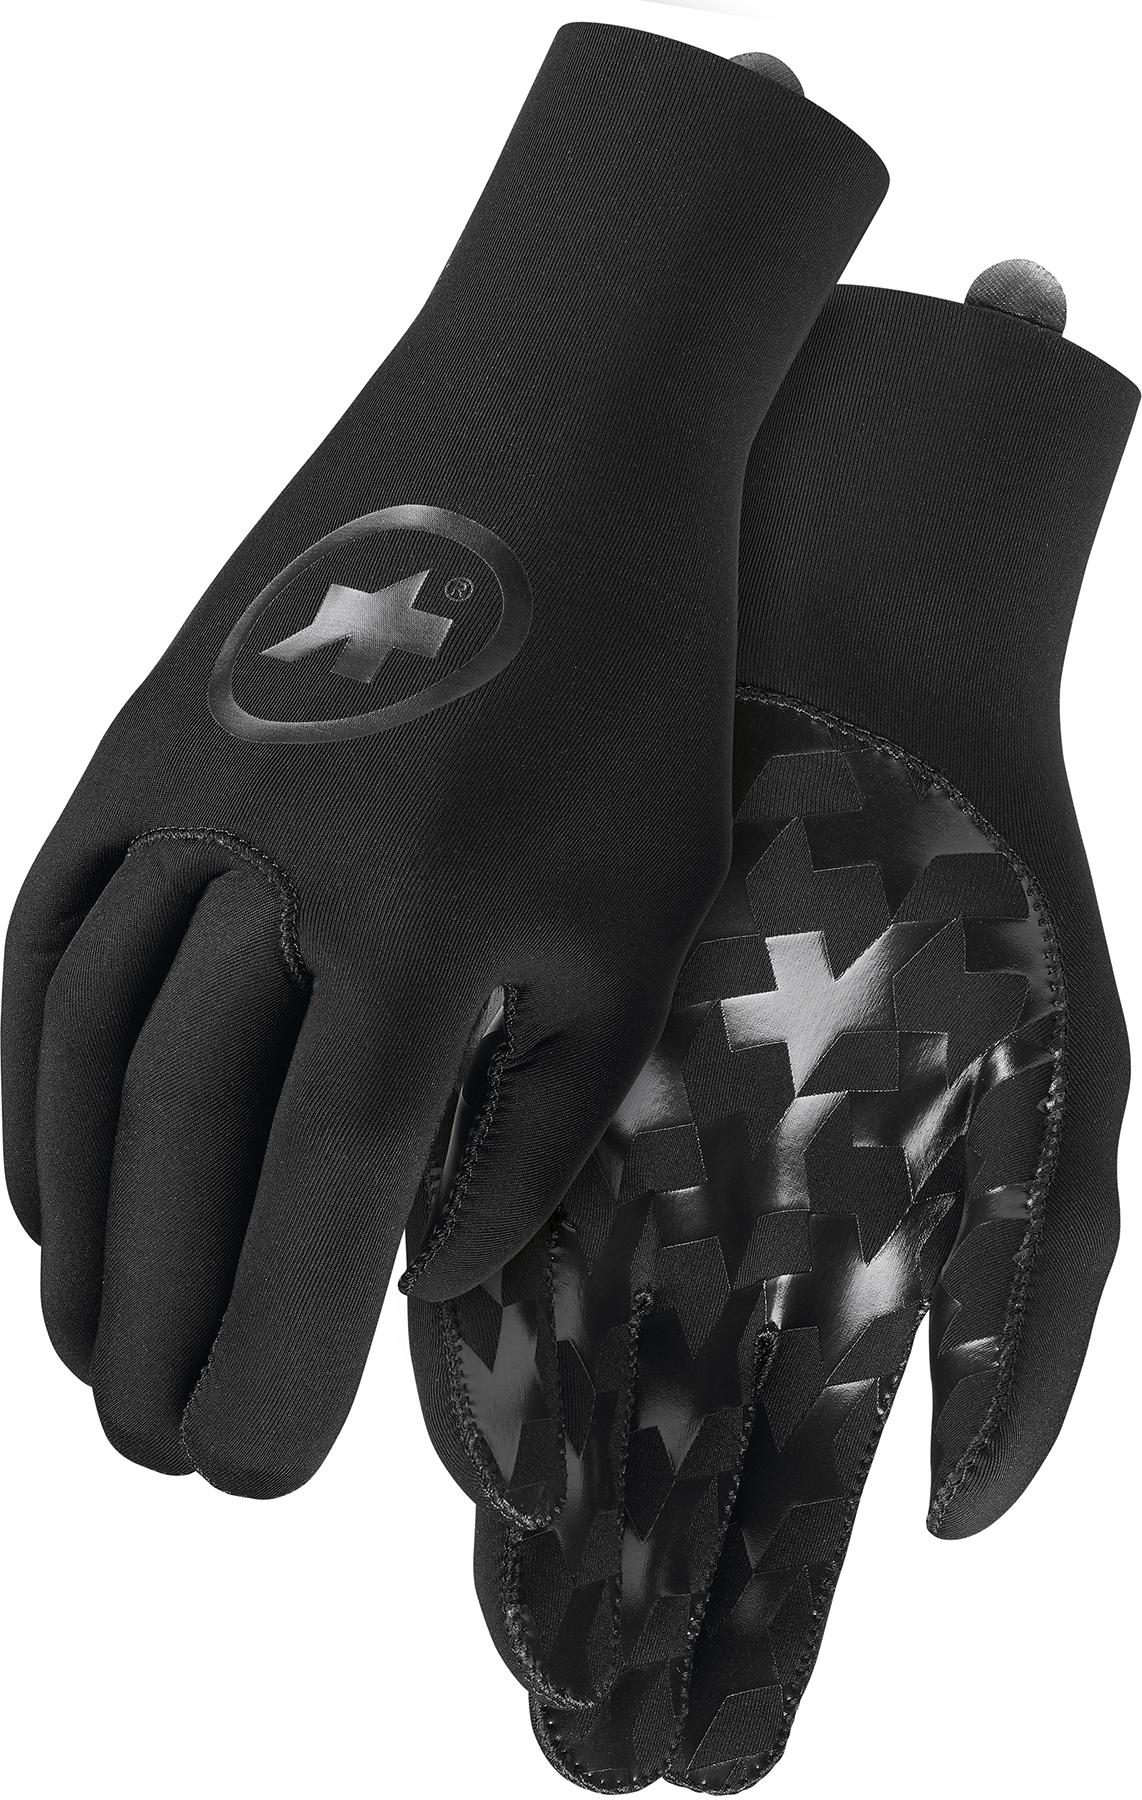 Assos Gt Rain Cycling Gloves  Black Series